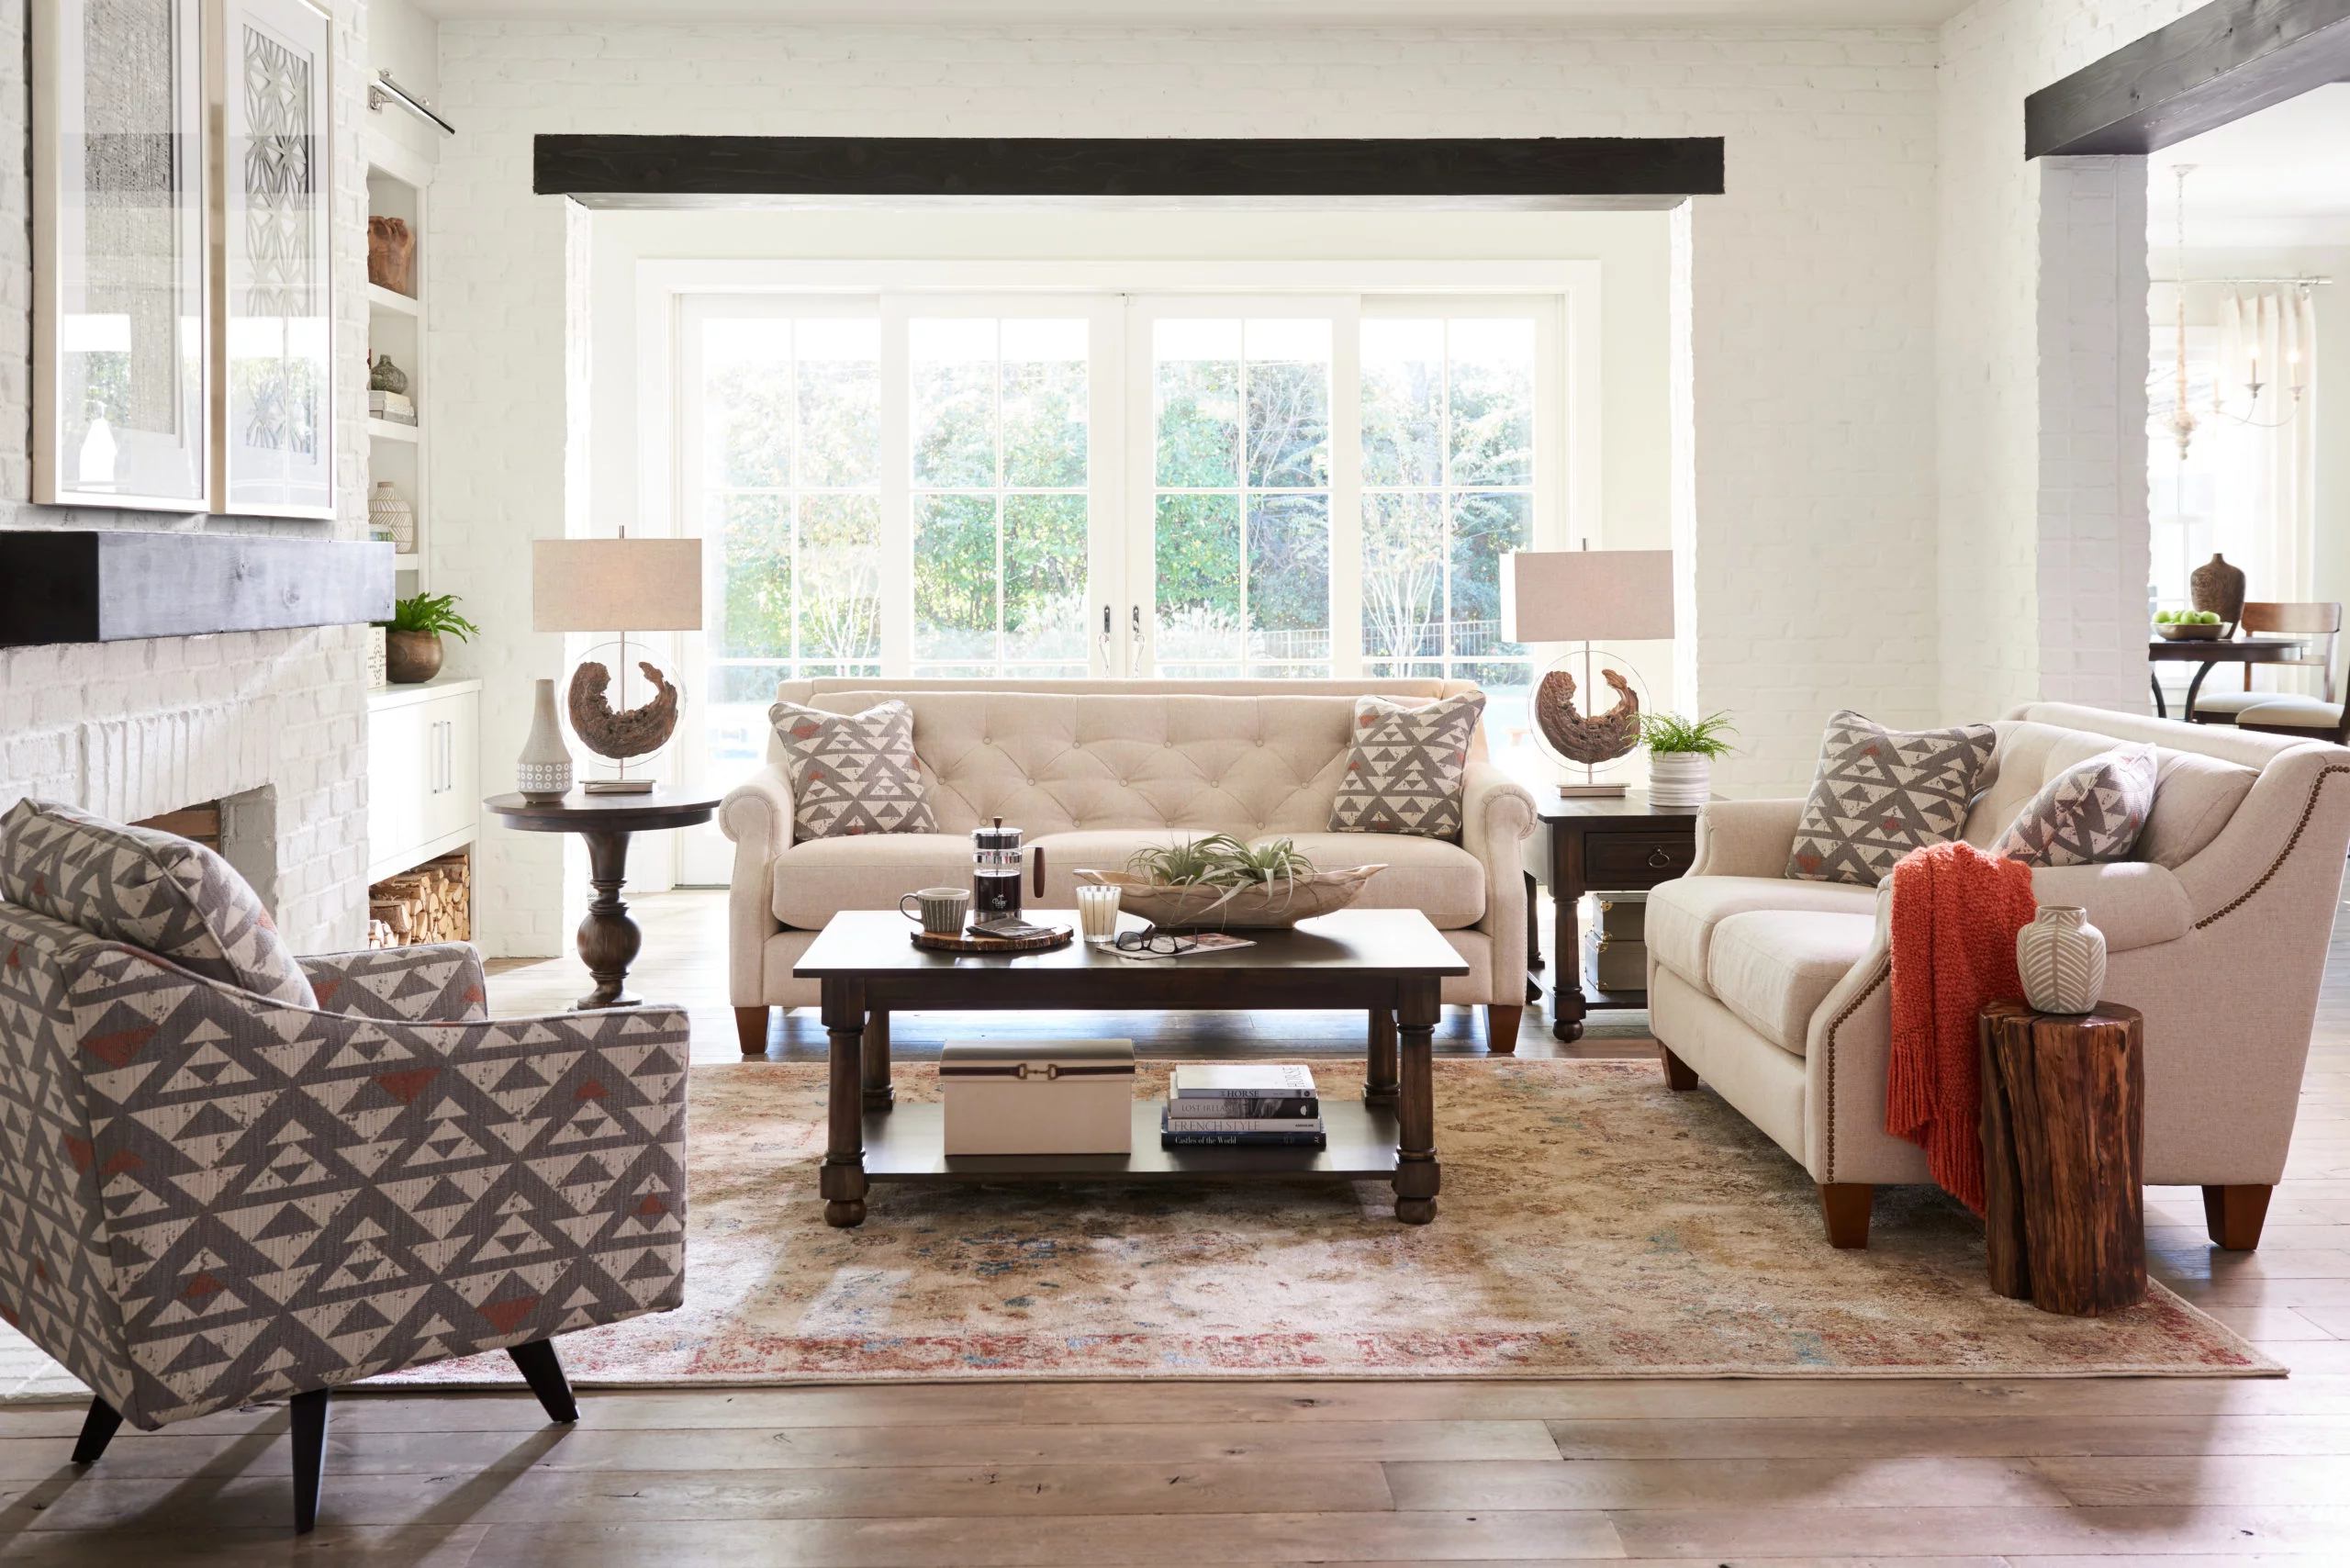 La-Z-Boy Aberdeen sofa in living showcasing a mix of 2020 design trends